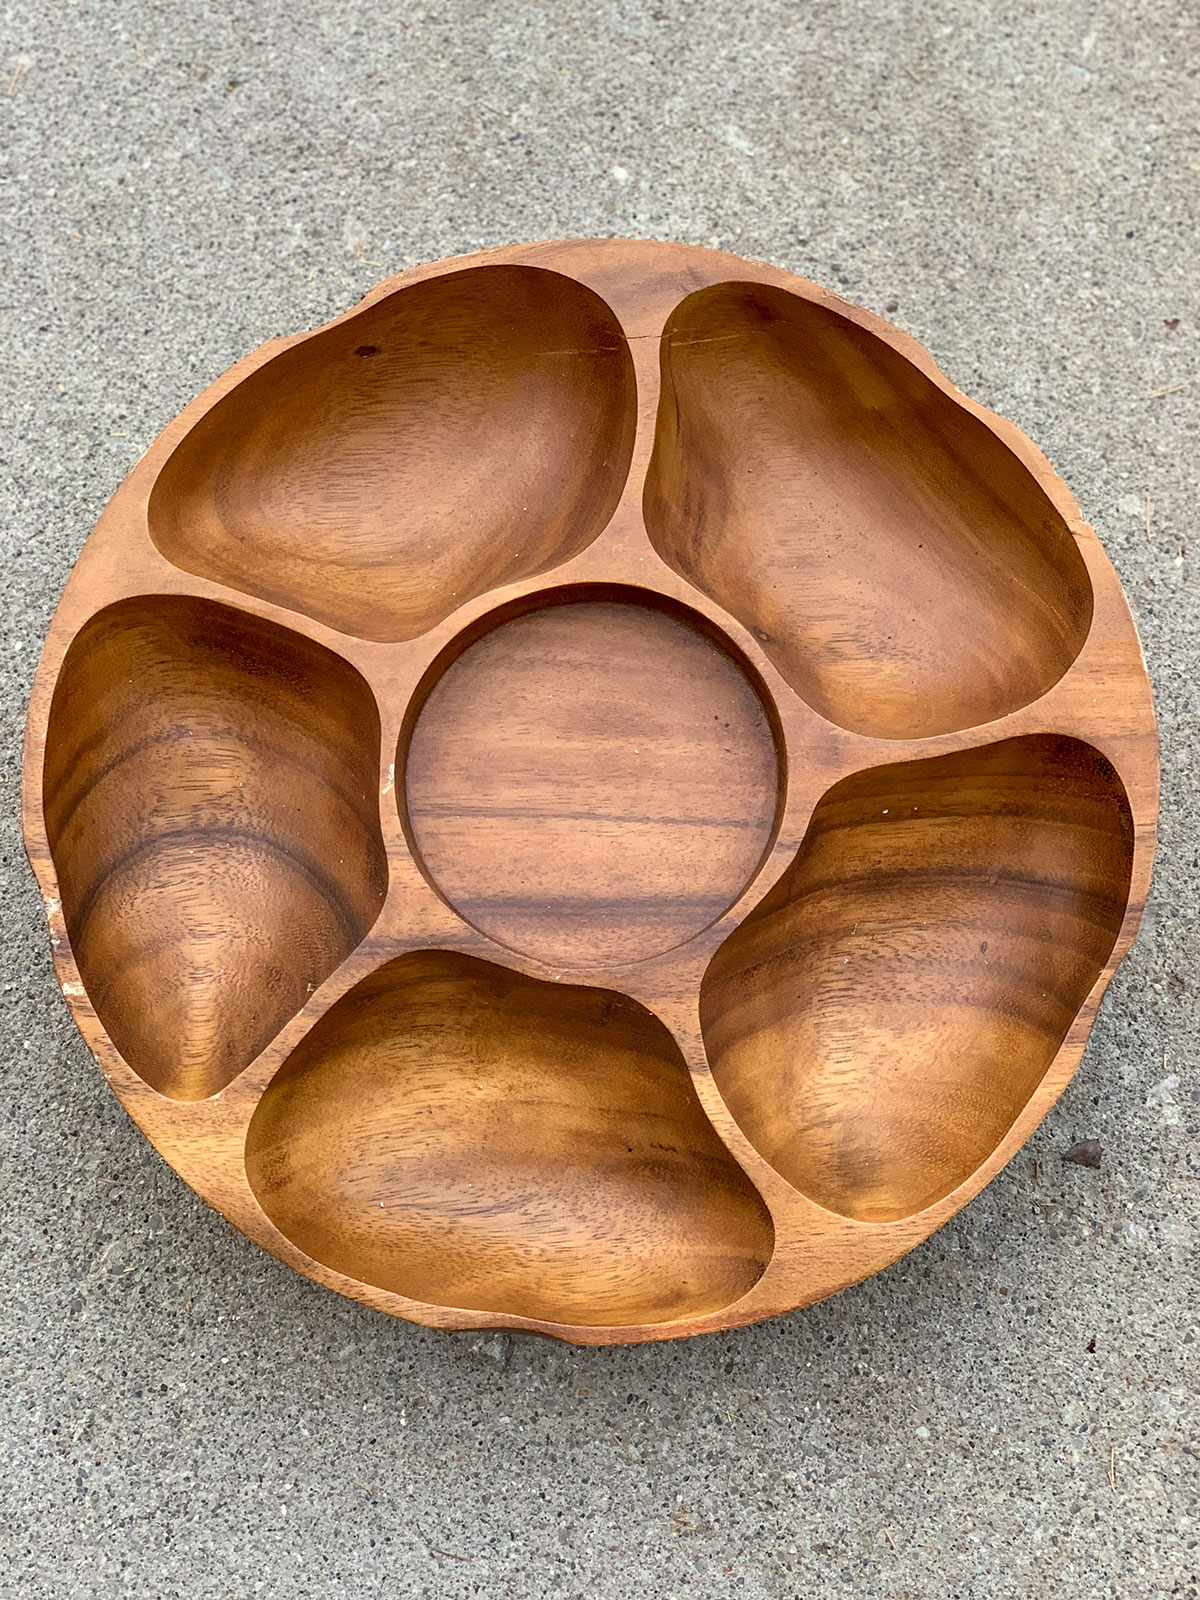 Mid-century modern era wooden serving bowl lazy Susan style.